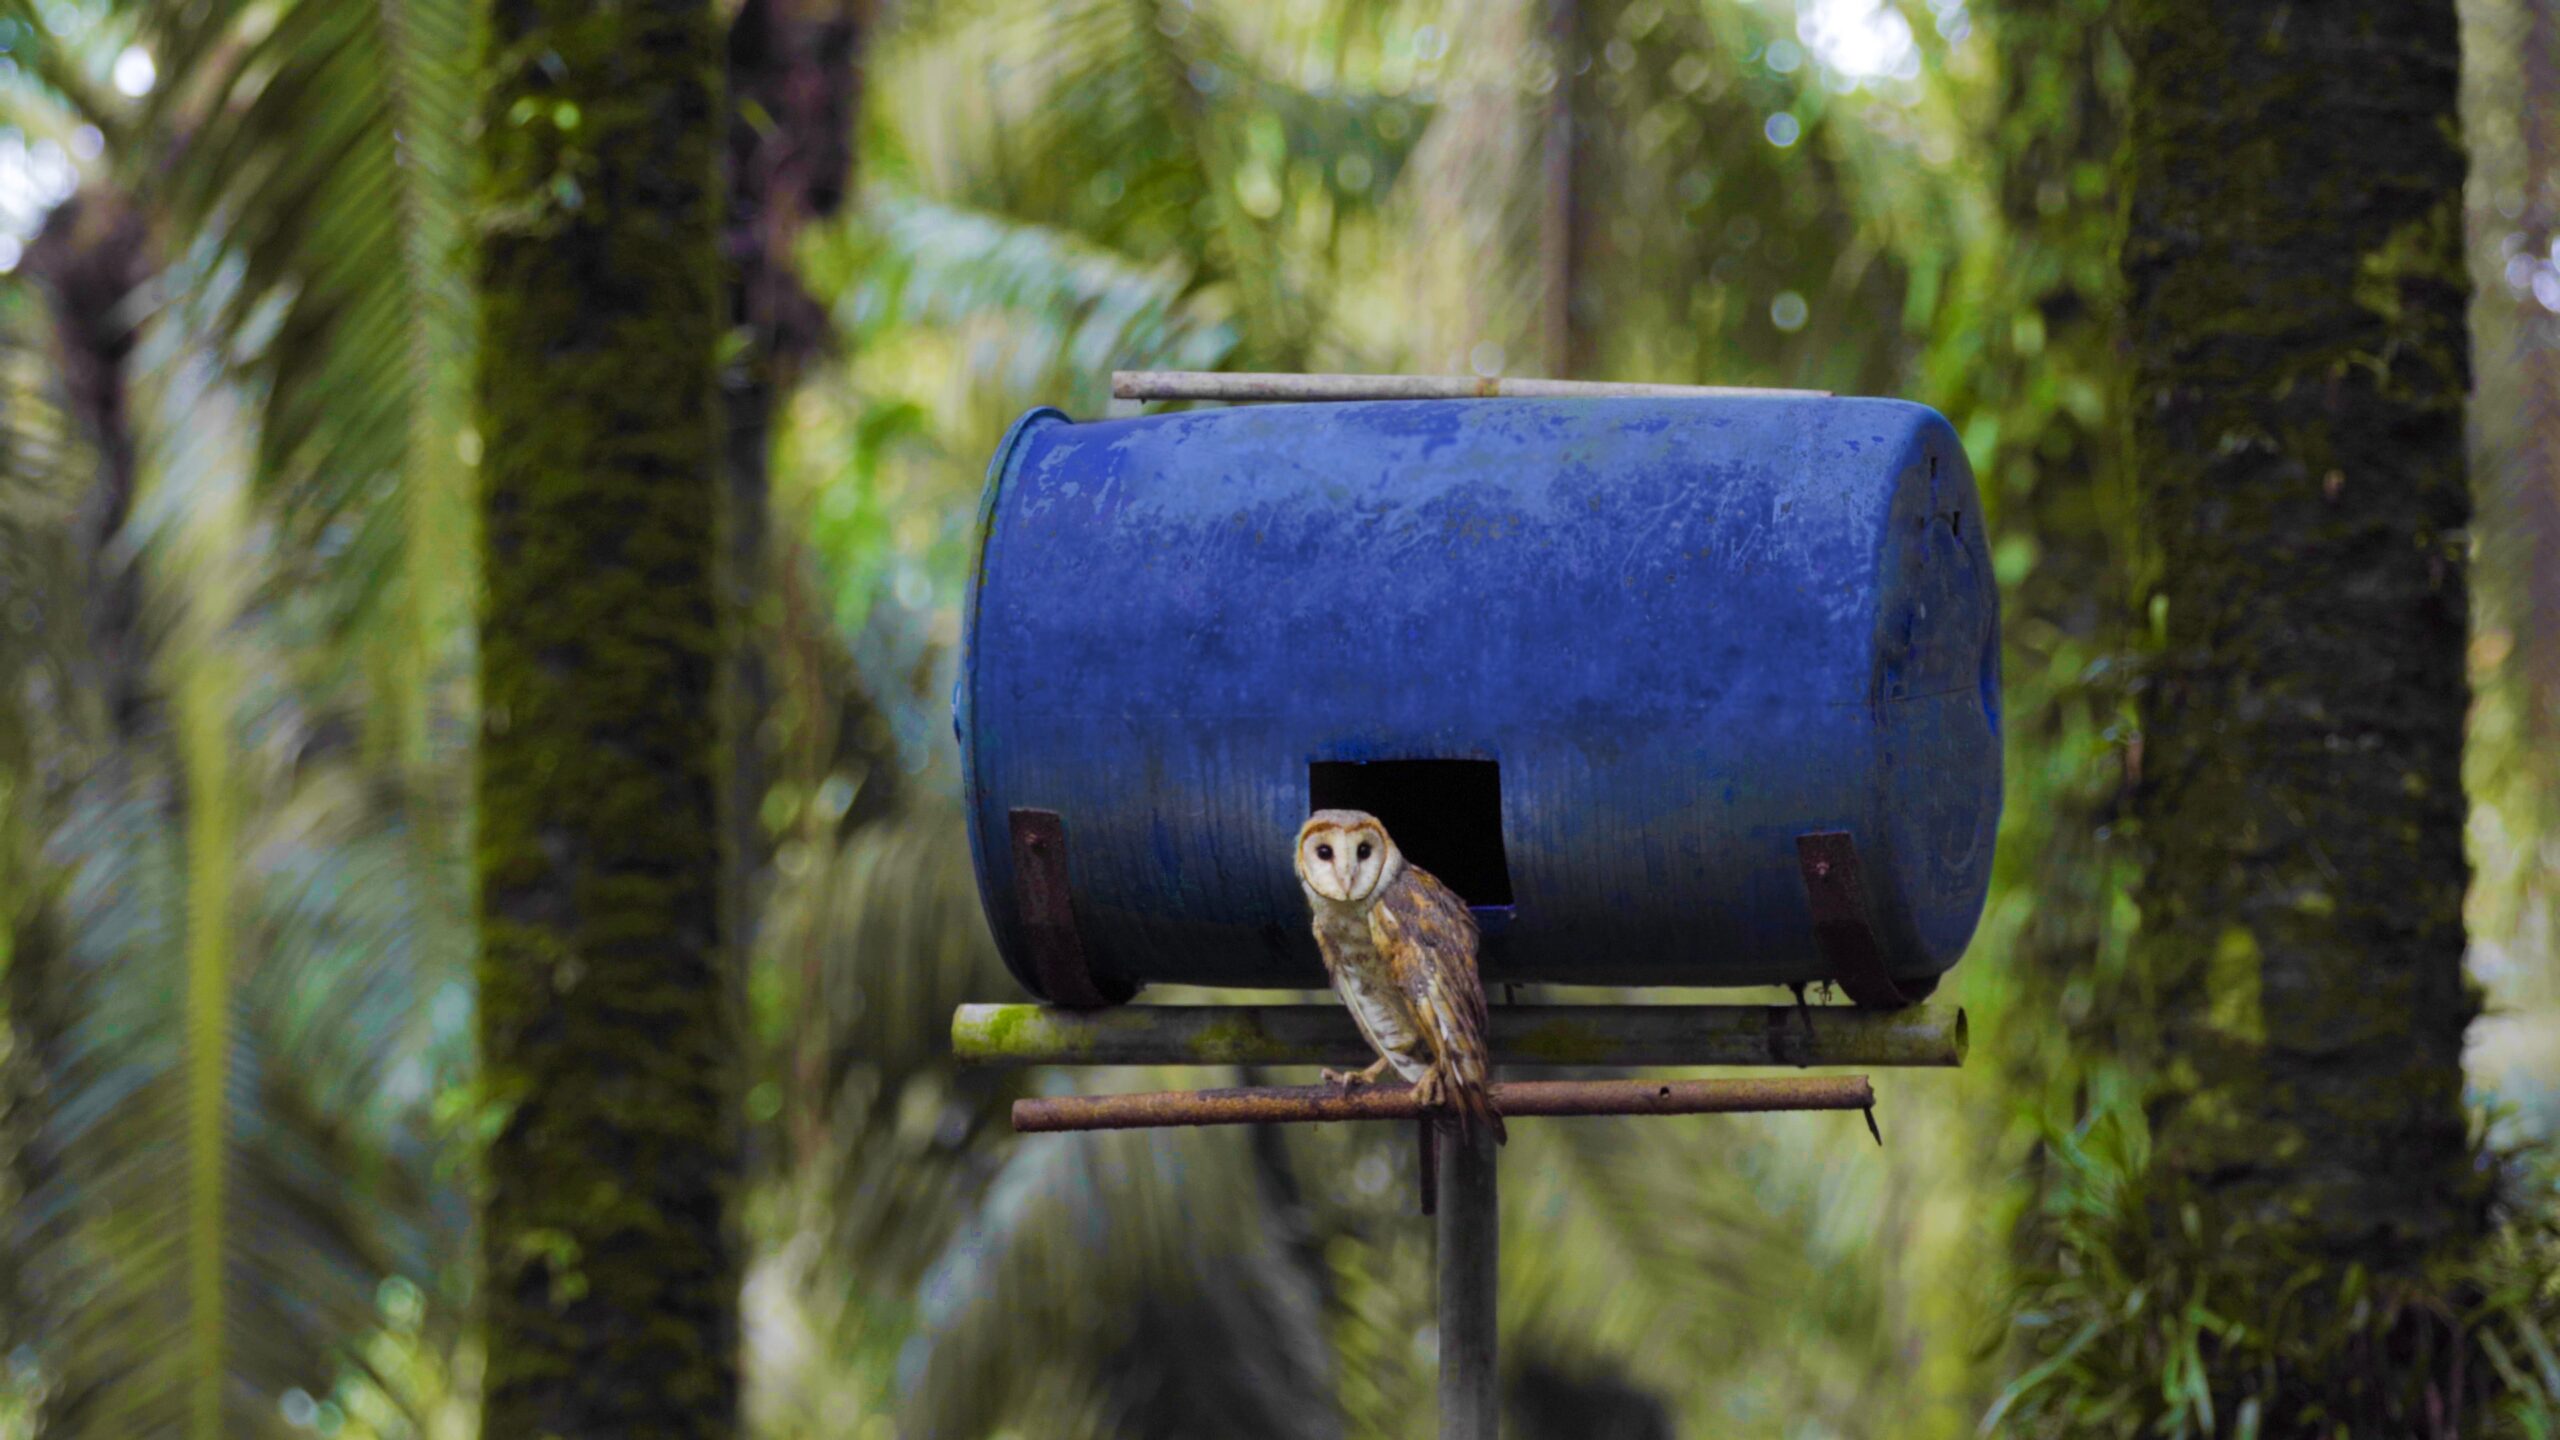 Musim Mas barn owl nest box in plantation with owl looking